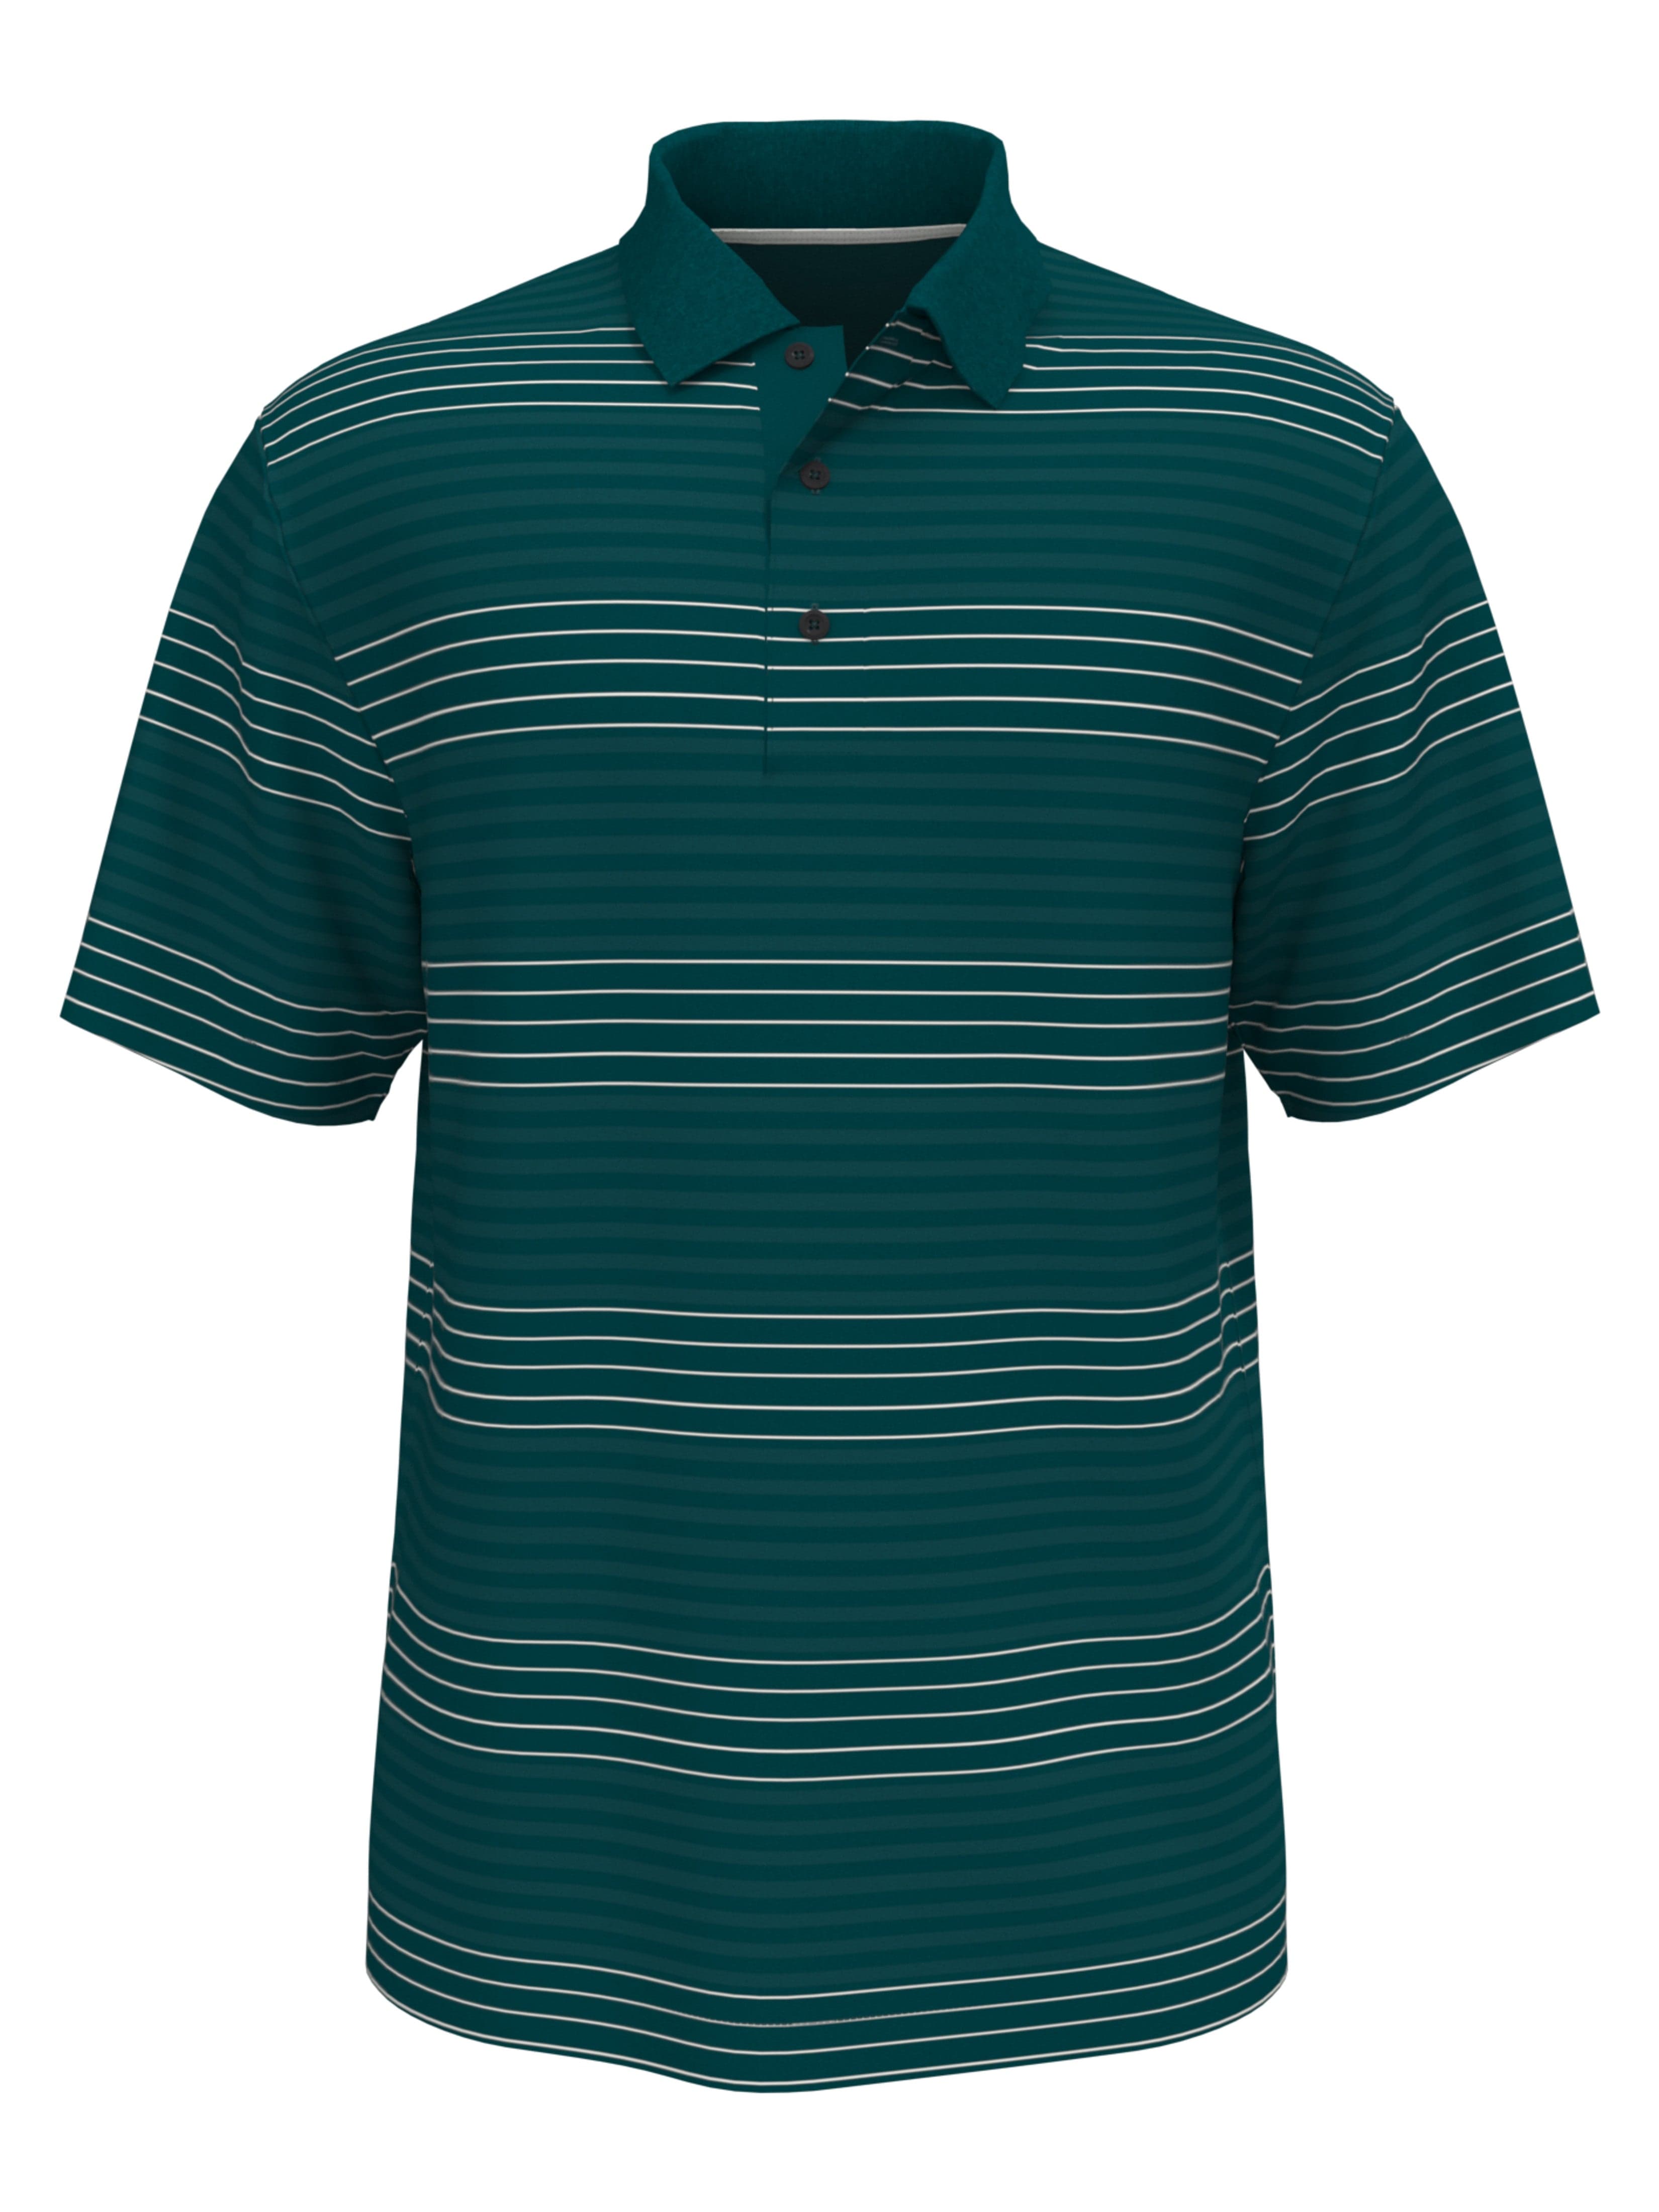 Jack Nicklaus Mens Shadow Energy Stripe Polo Shirt, Size Large, Atlantic Deep Green, 100% Polyester | Golf Apparel Shop